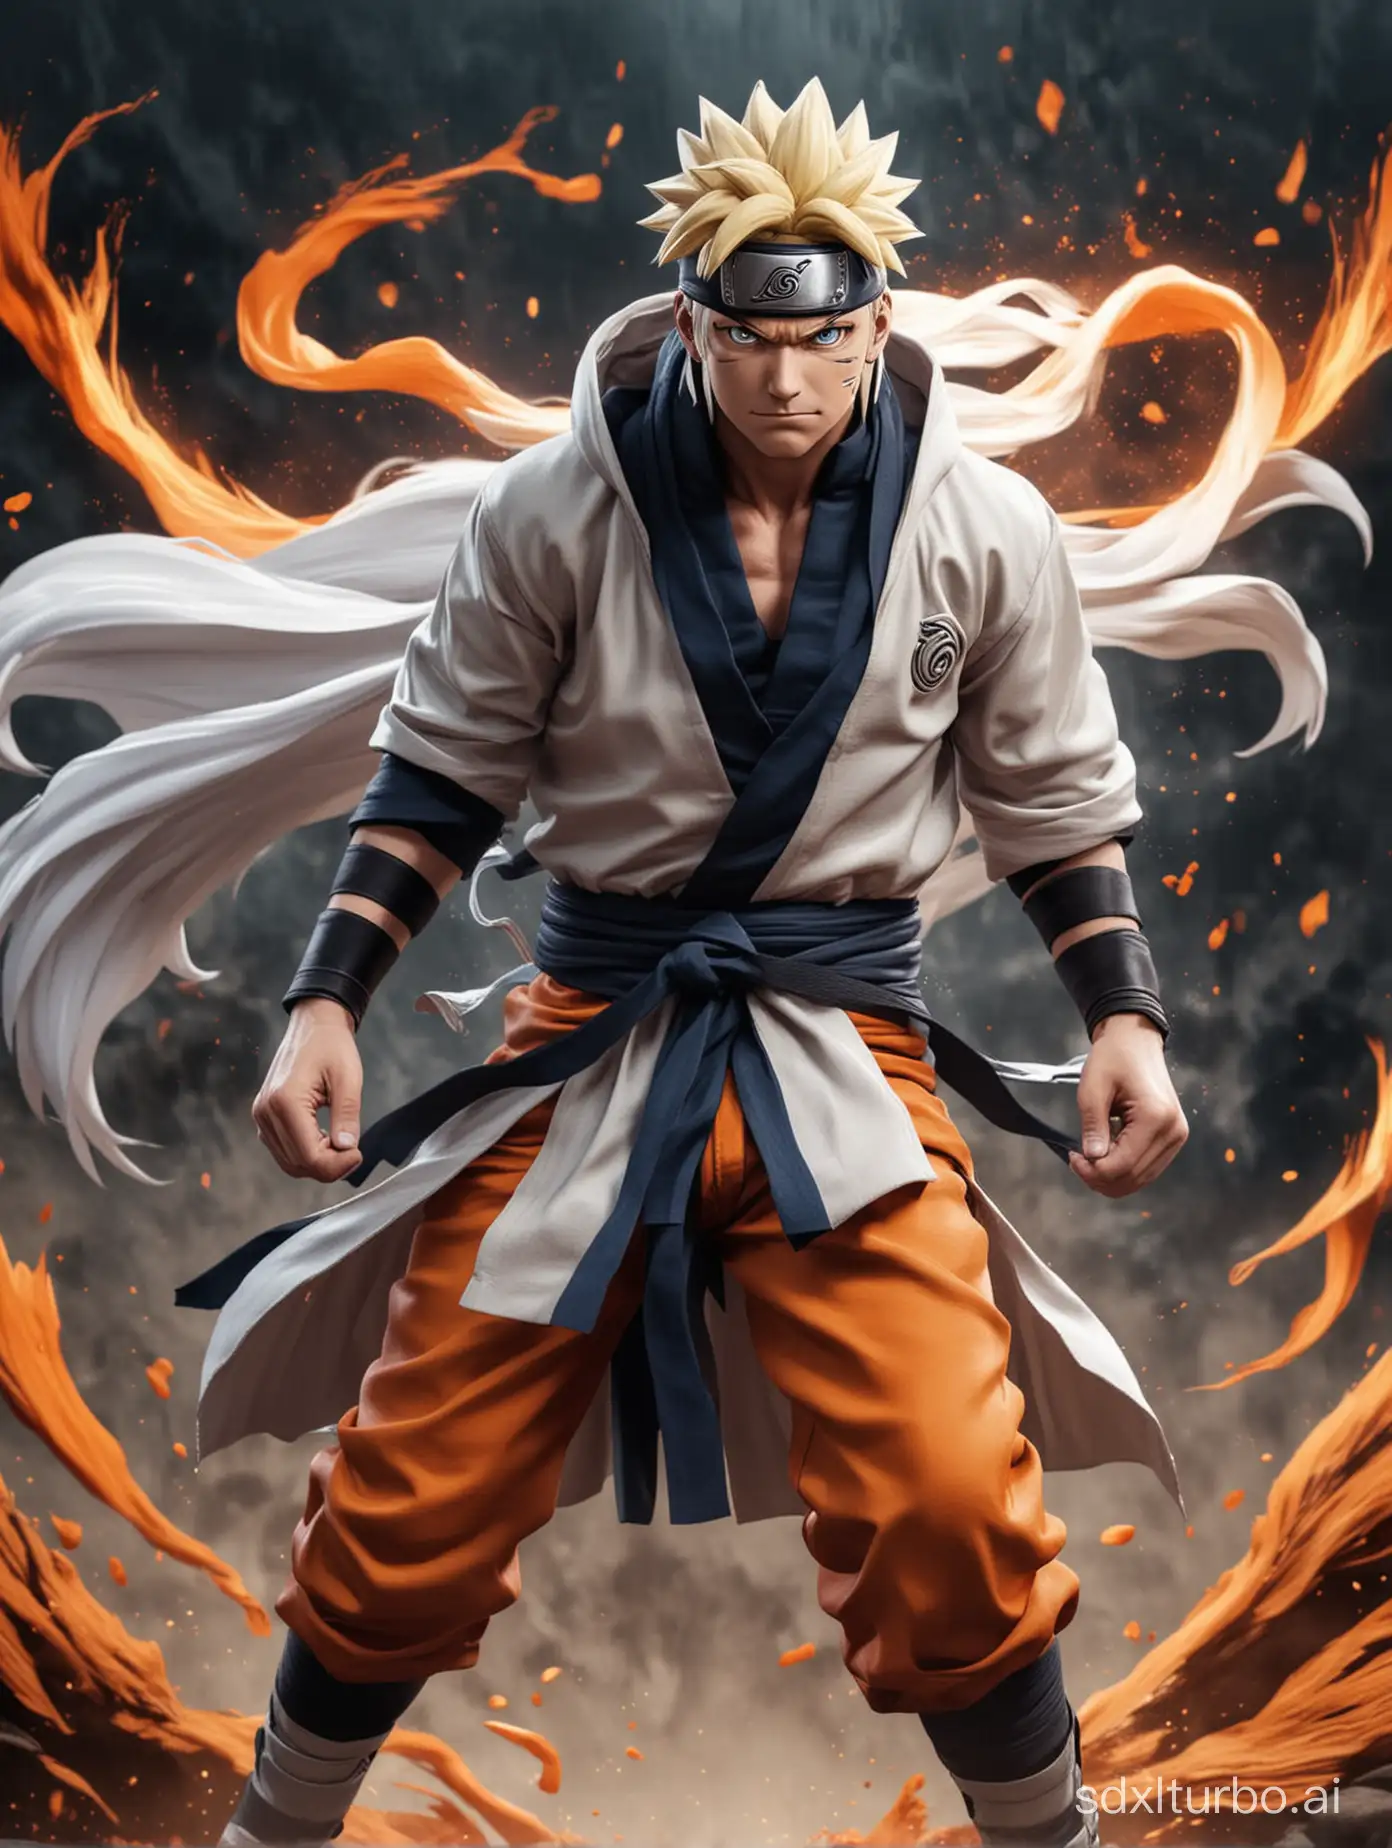 Hokage-Naruto-Mastering-Ultra-Instinct-Mode-in-Epic-Battle